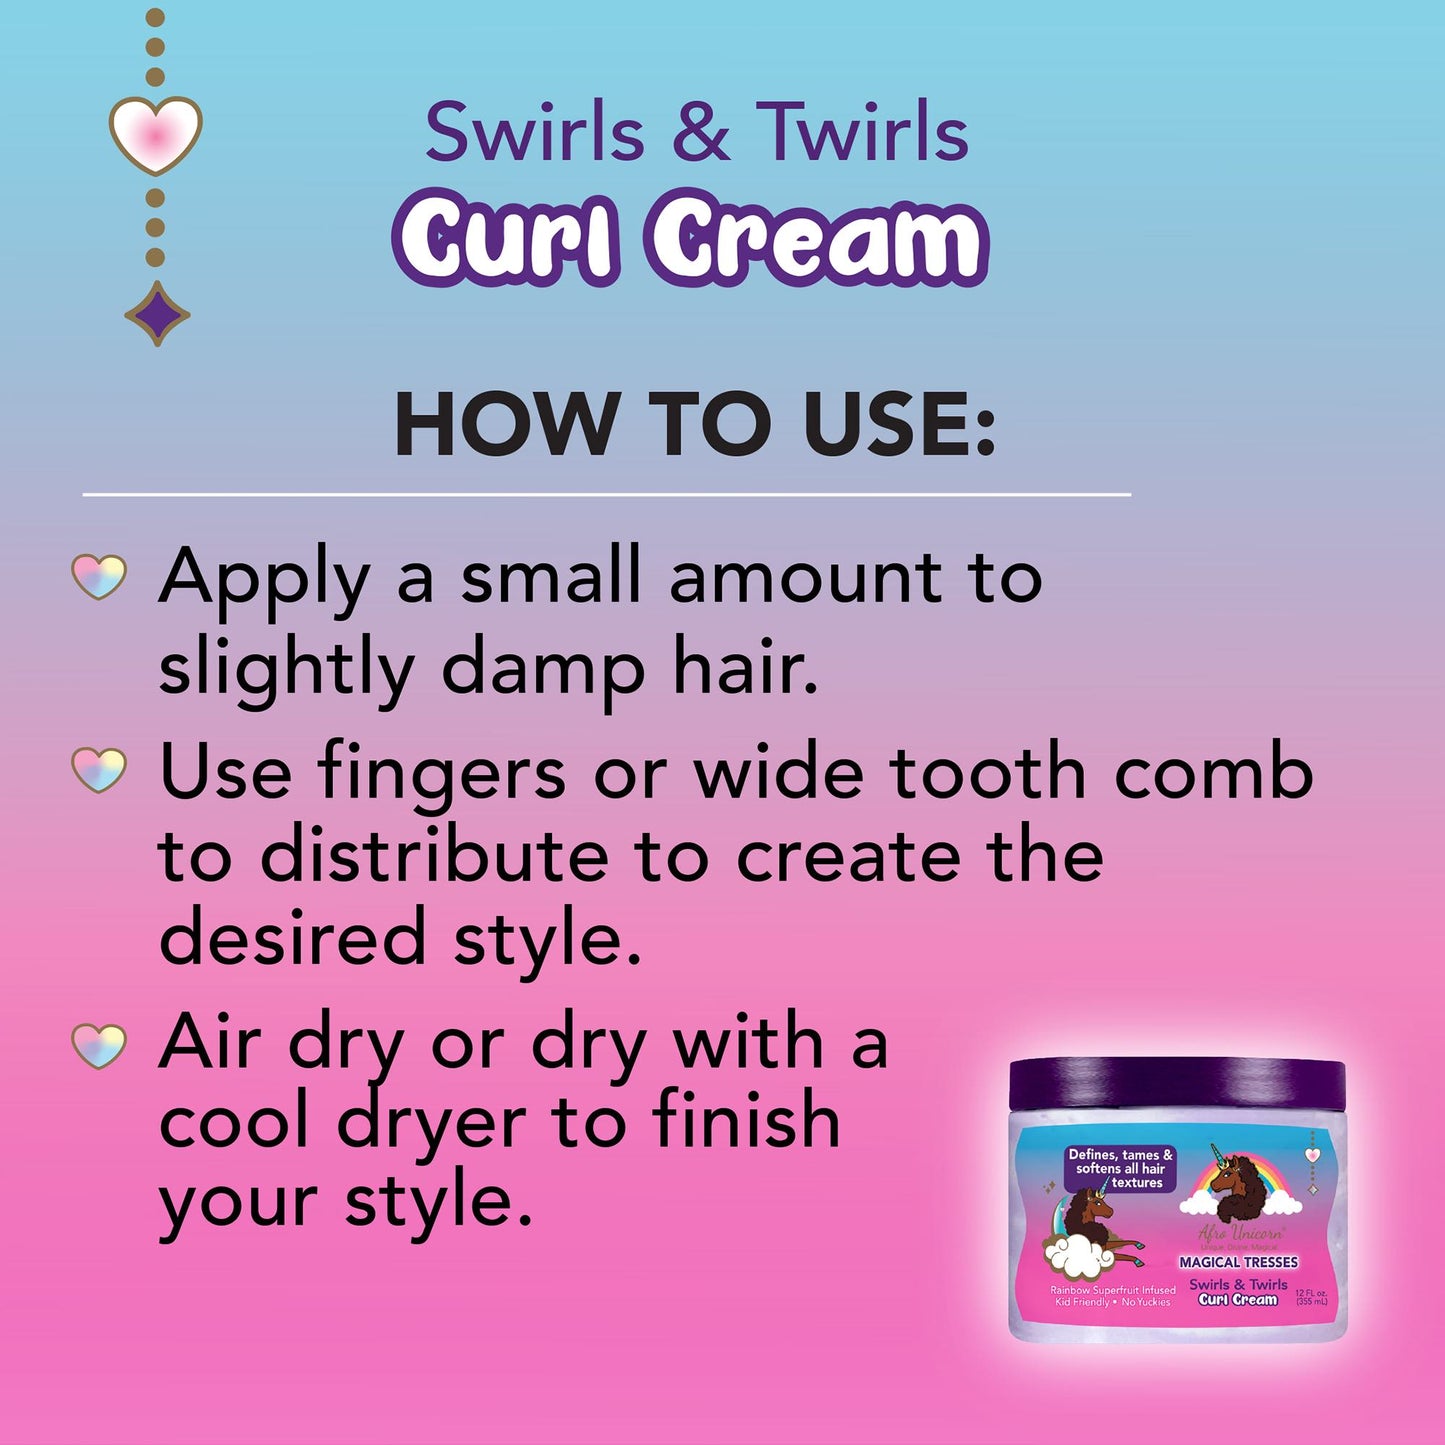 Afro Unicorn Swirls & Twirls Curl Cream how to use label.